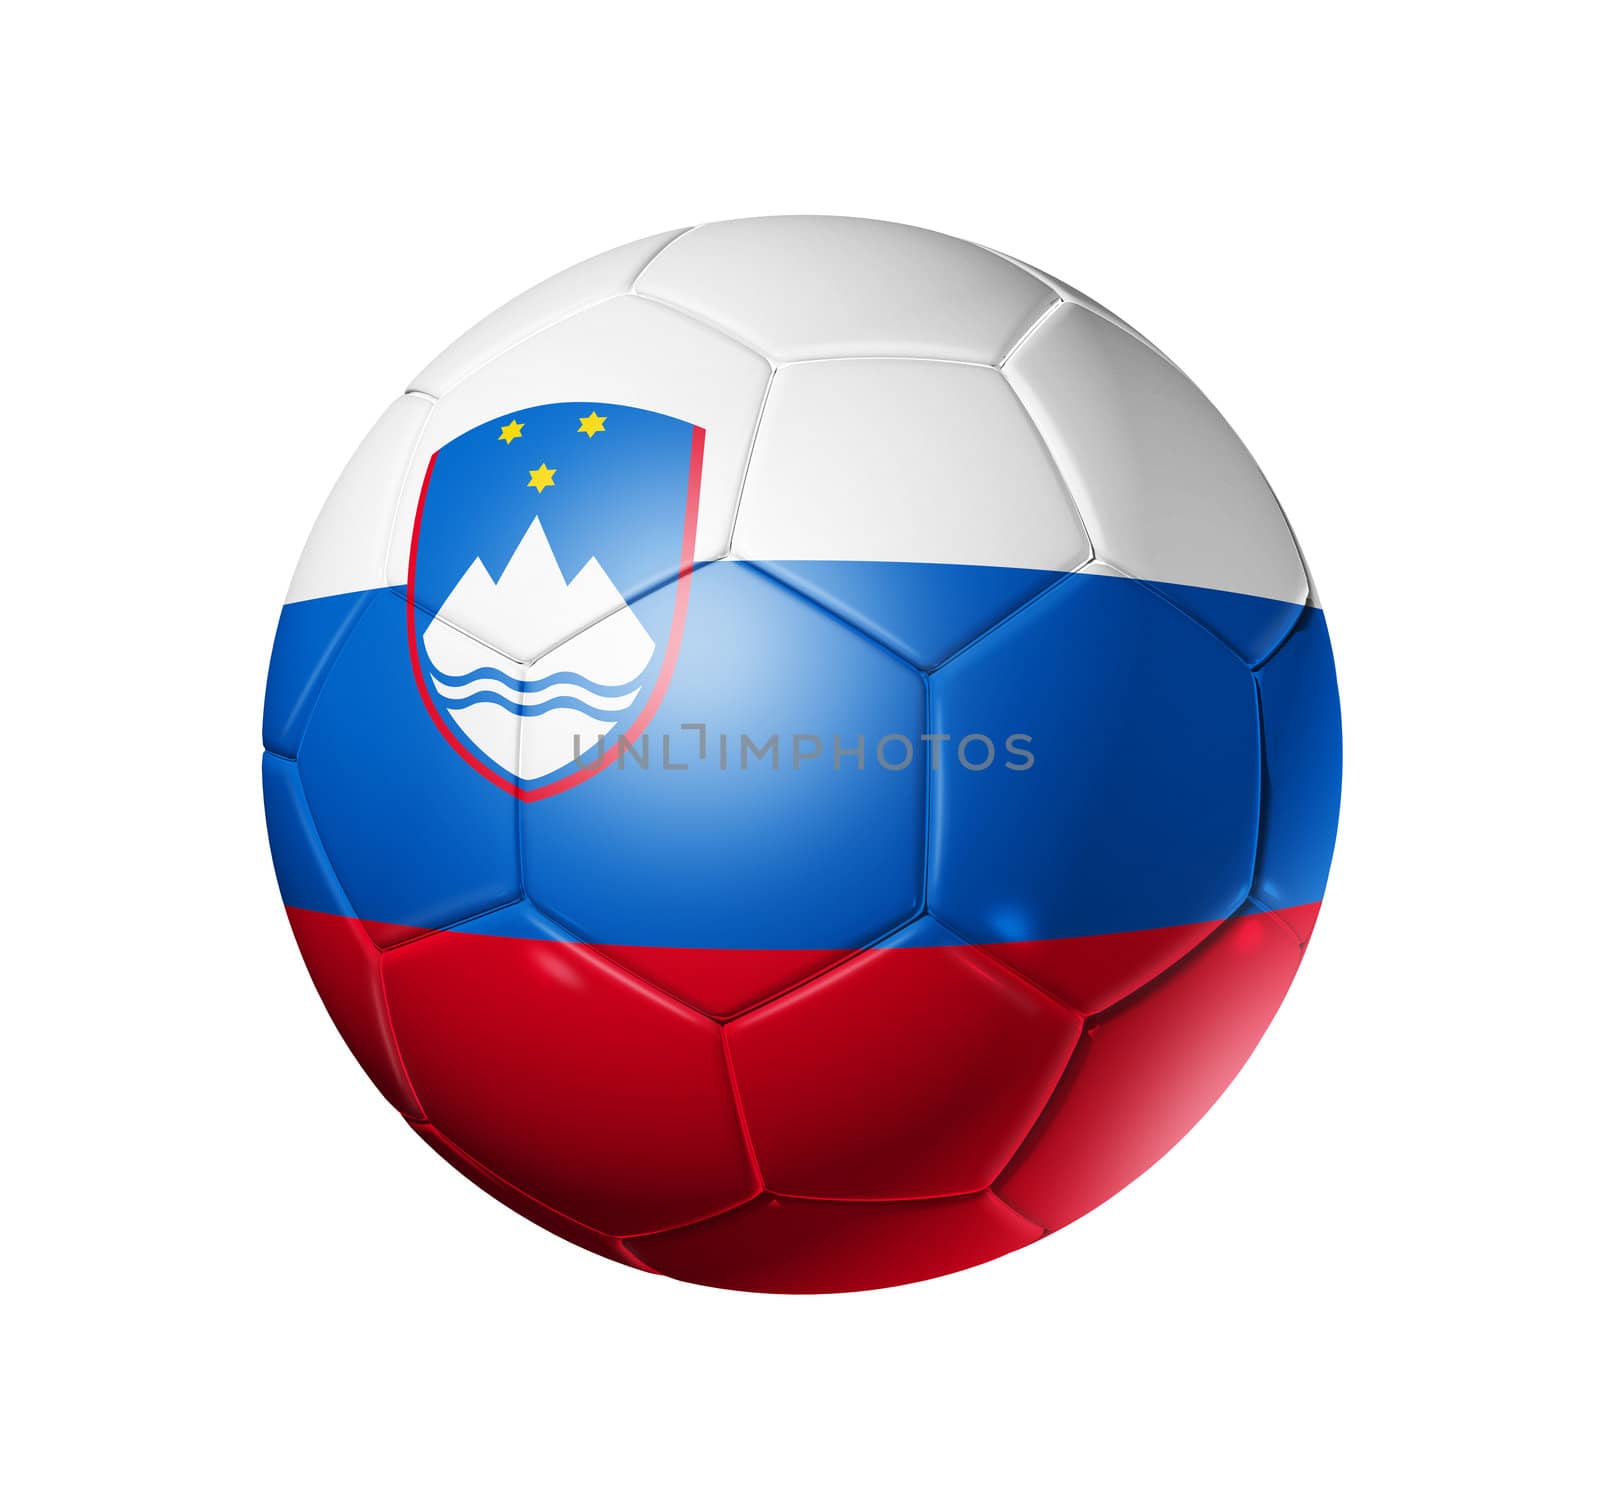 Soccer football ball with Slovenia flag by daboost